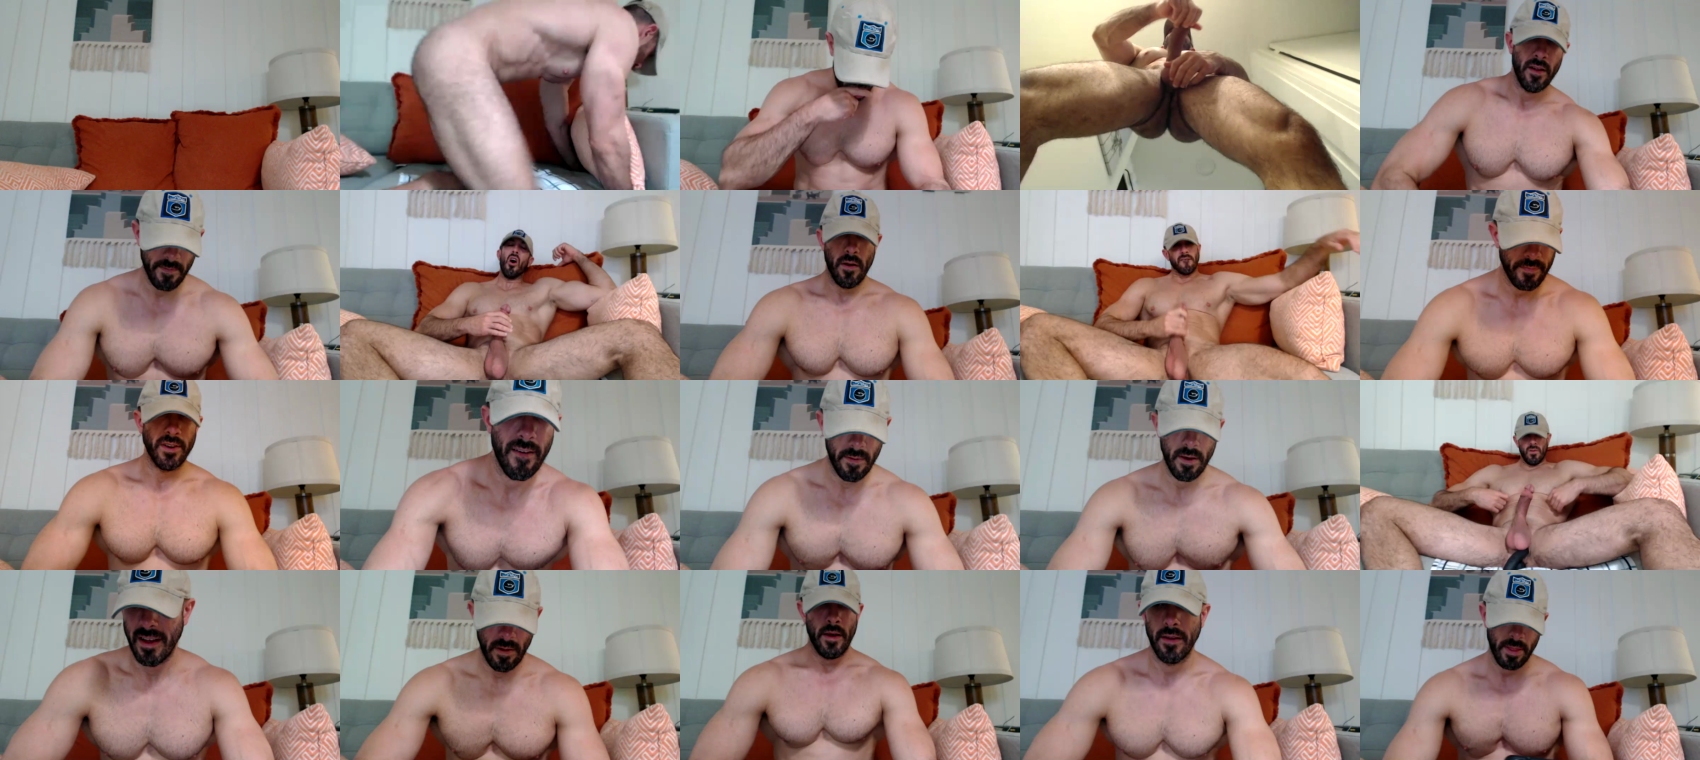 nerdmuscles2x  13-08-2022 Males Topless